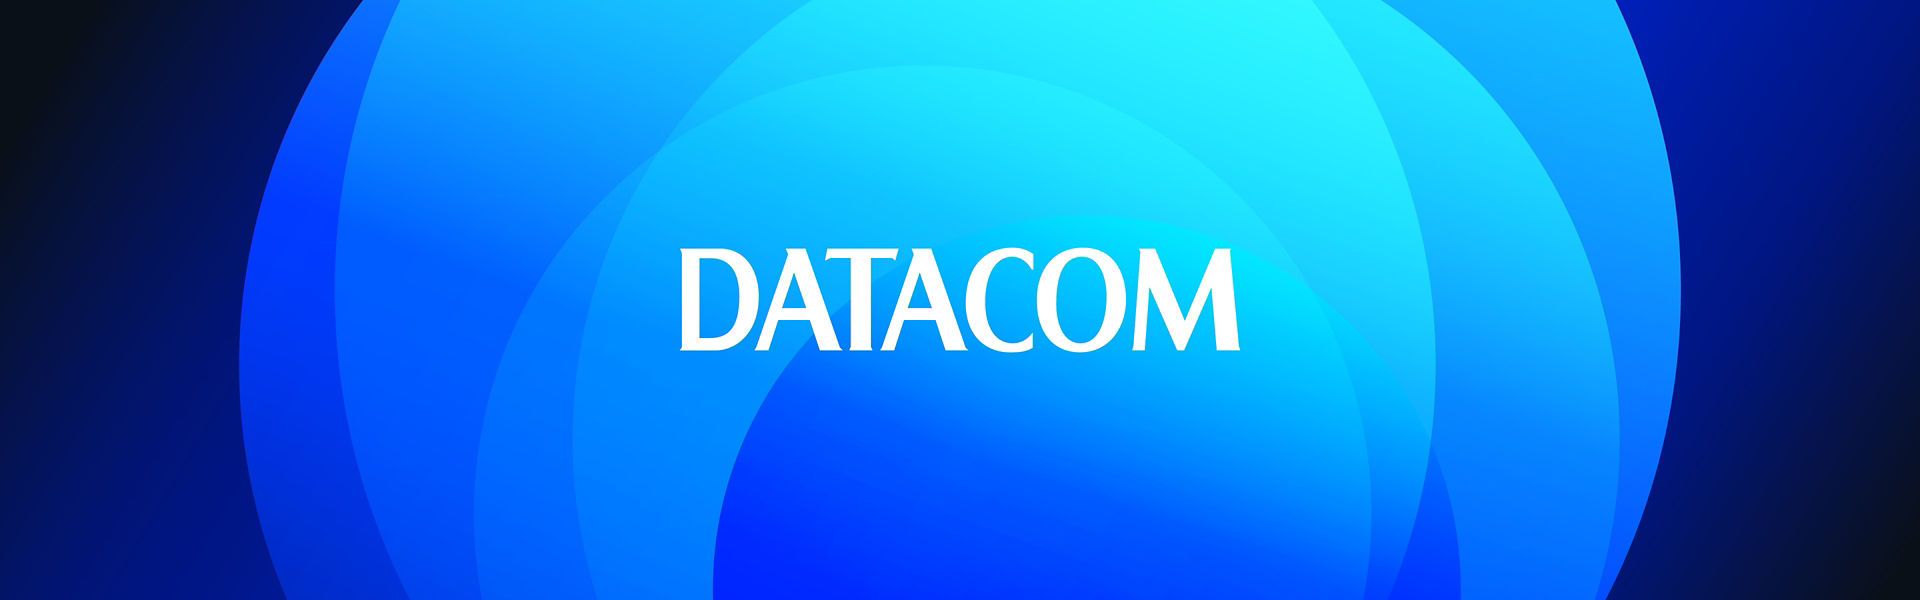 Datacom FY23 Financial Year Website Banner